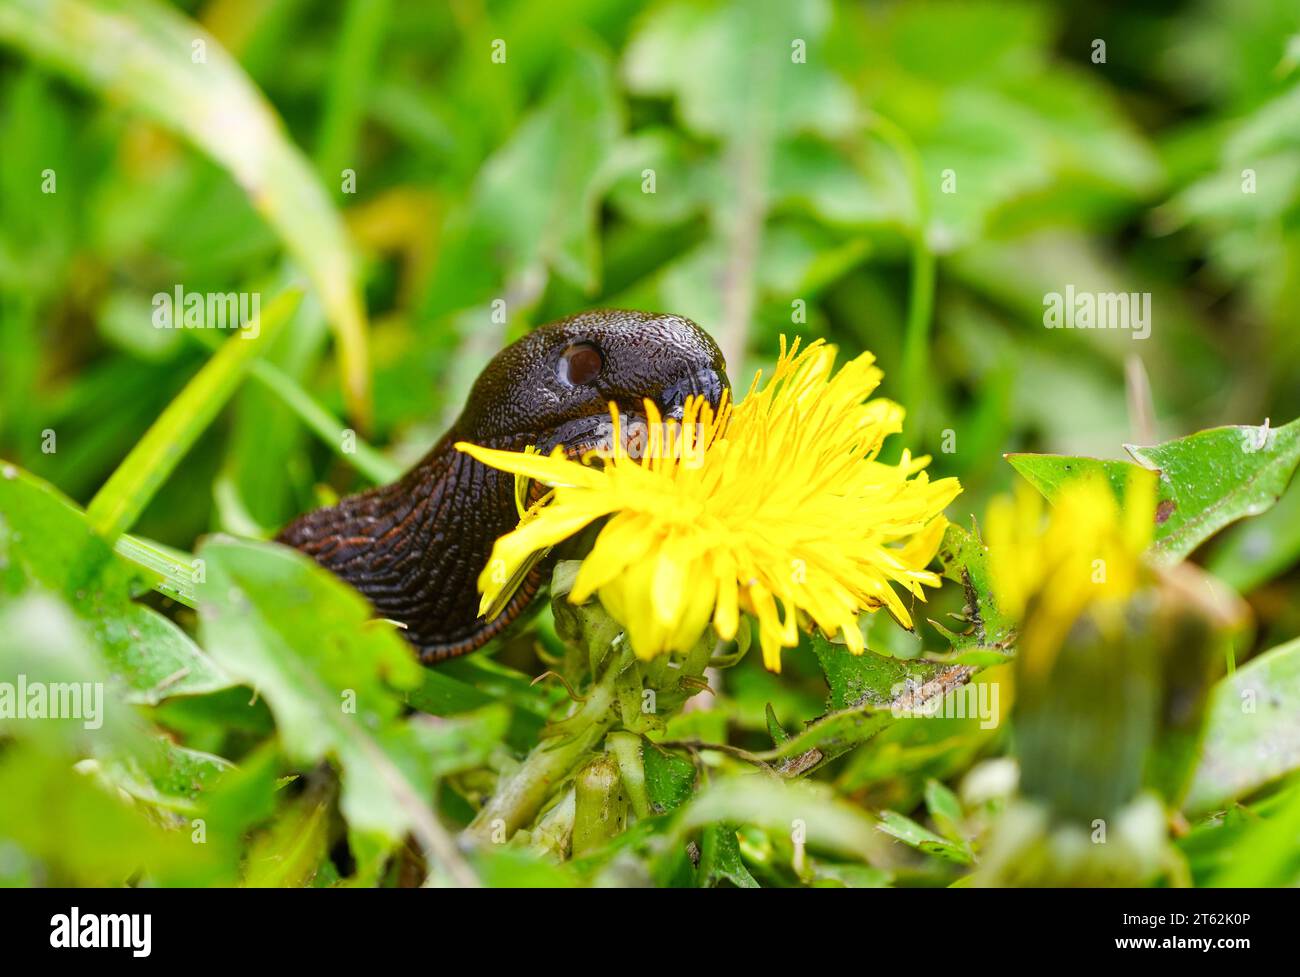 Close-up of a land slug on a yellow dandelion flower. Shell-less terrestrial gastropod mollusc. Stock Photo